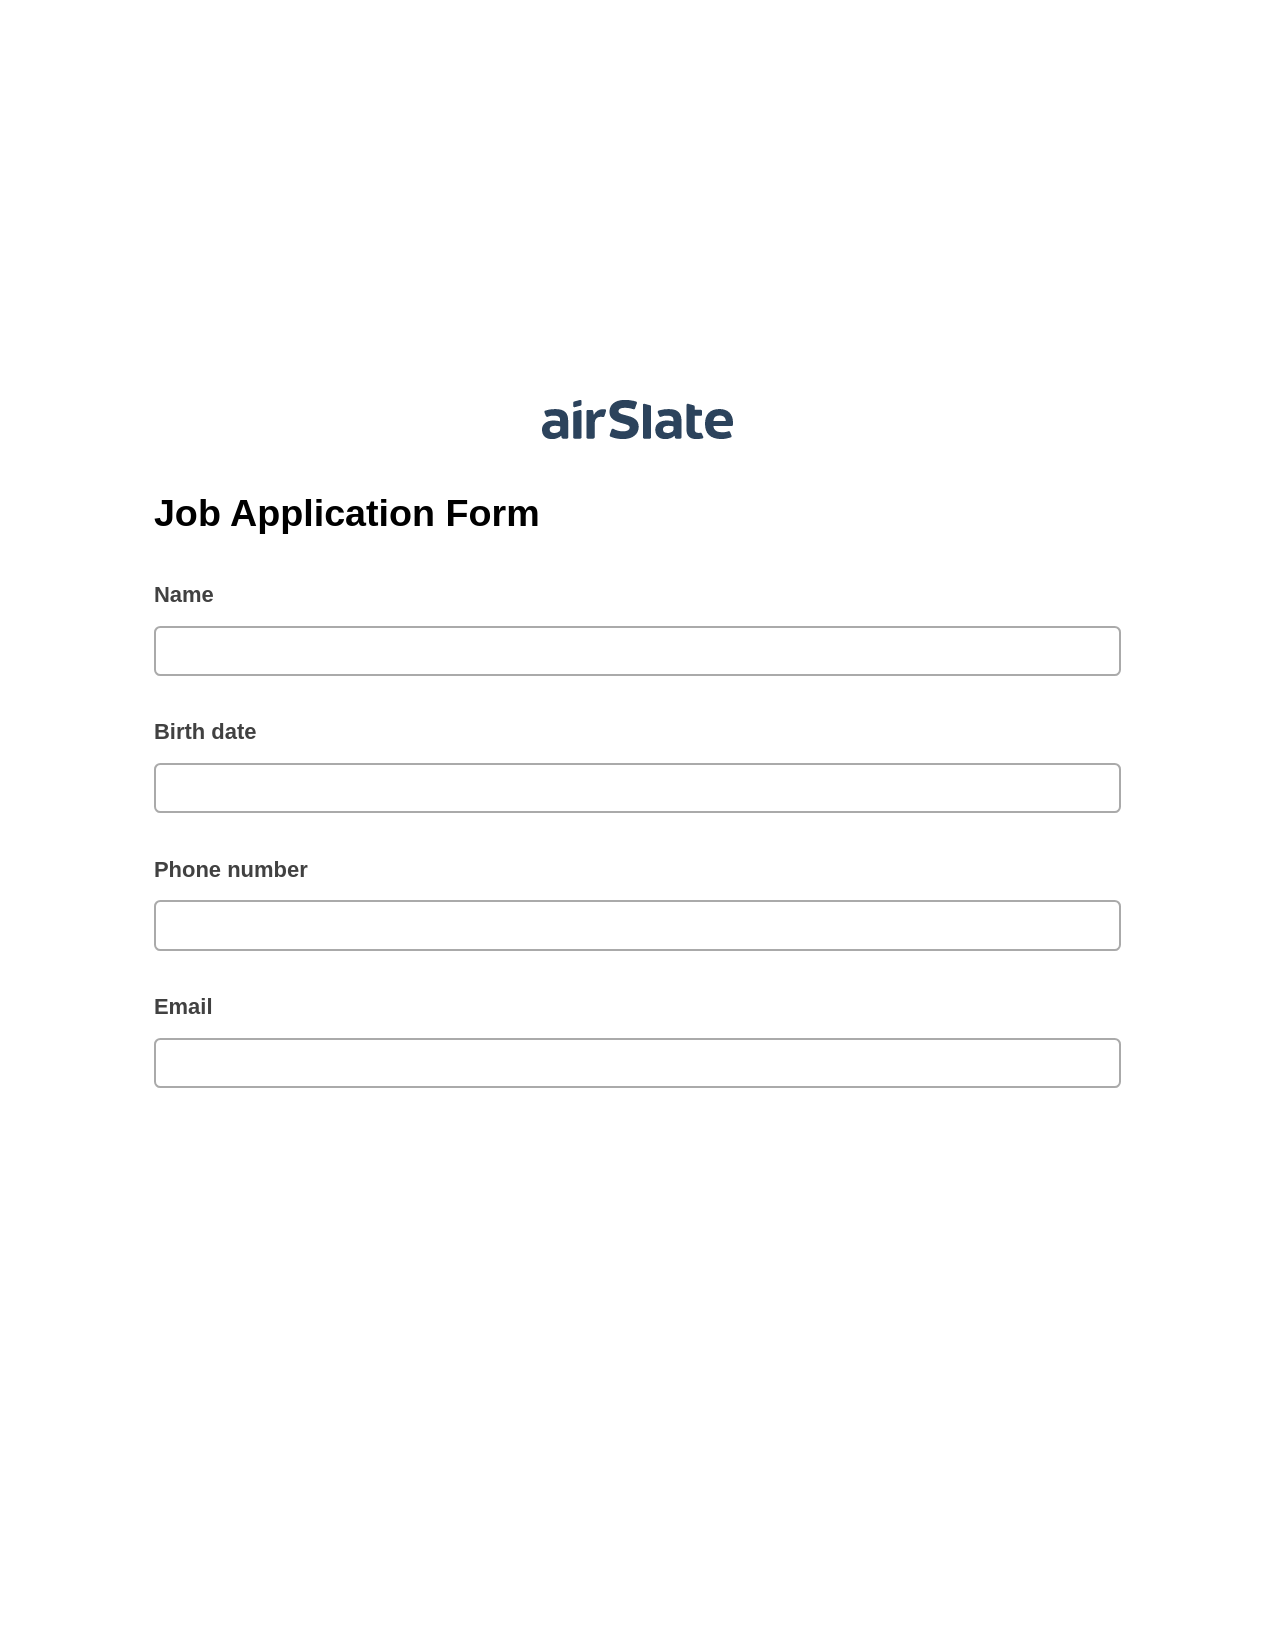 Job Application Form Pre-fill from Google Sheet Dropdown Options Bot, Lock the slate bot, Webhook Postfinish Bot